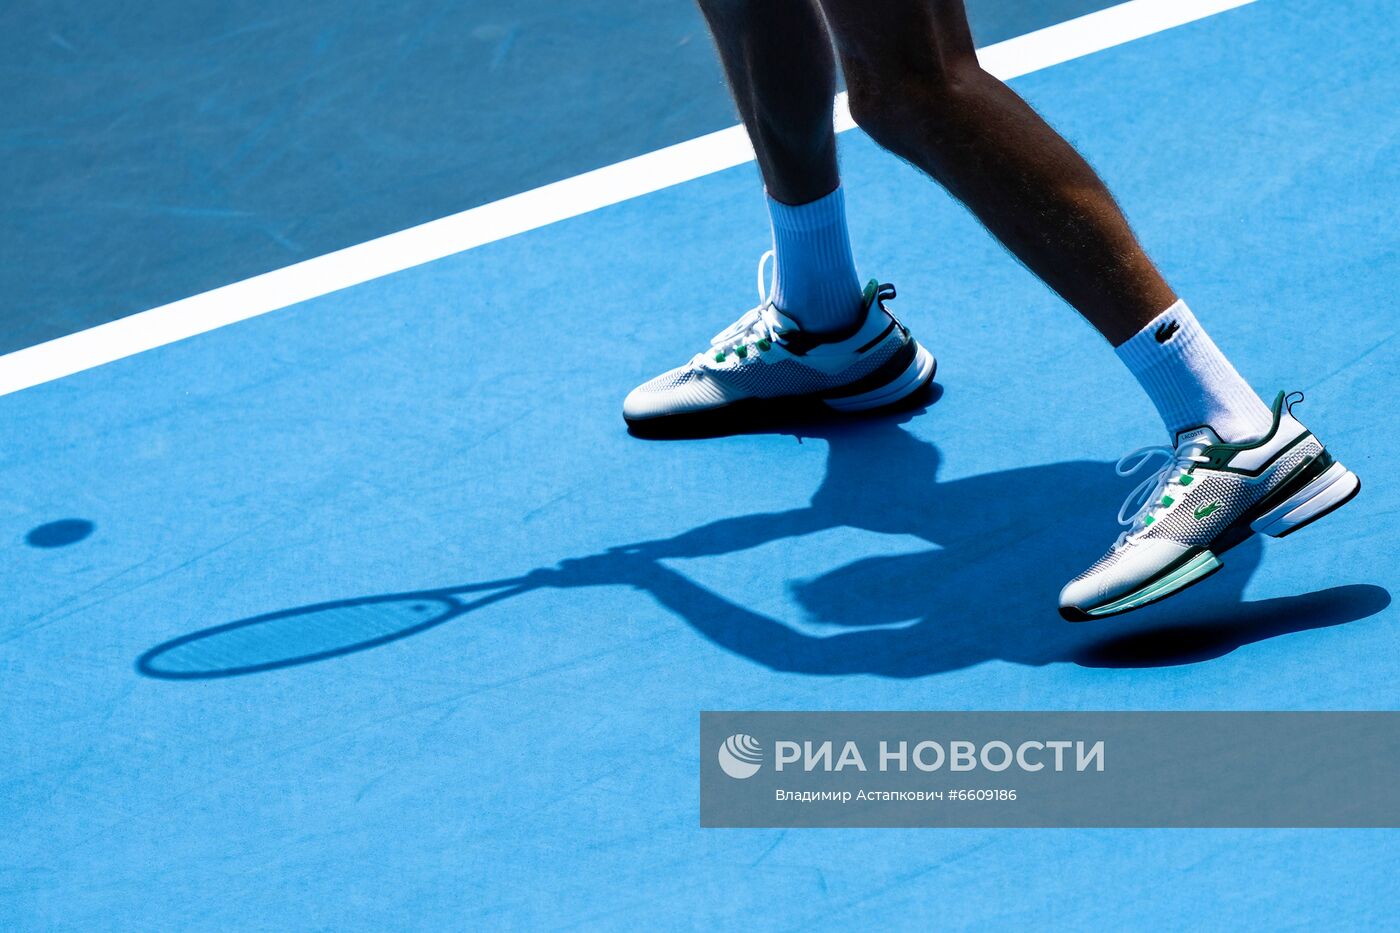 Олимпиада-2020. Теннис. Мужчины. Ф. Фоньини - Д. Медведев